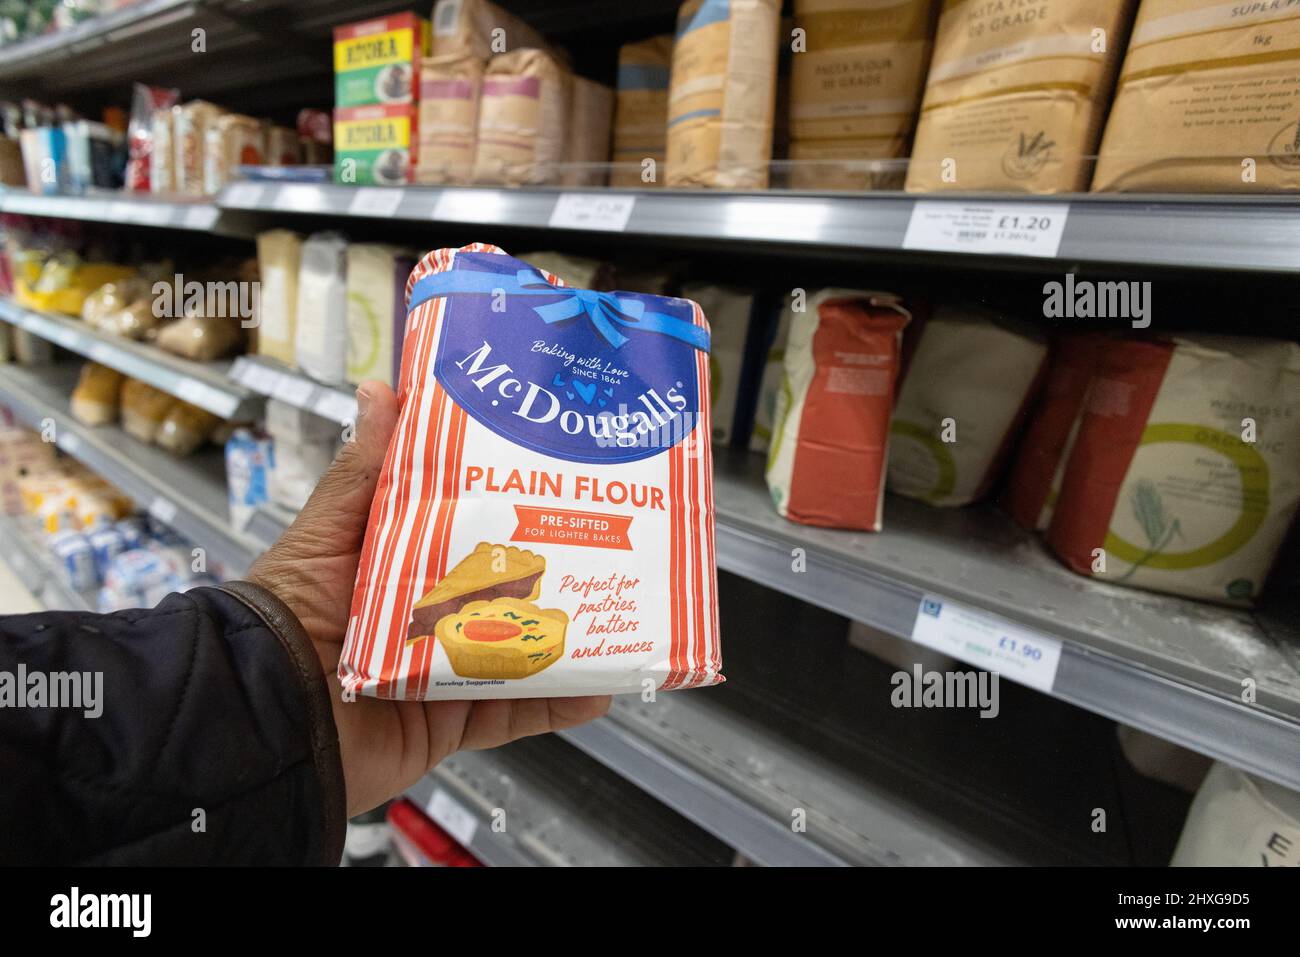 Bolsa de harina; comprar una bolsa de harina - McDougalls Plain harine, en un supermercado con bolsas de harina en los estantes del supermercado, Waitrose supermercado UK Foto de stock